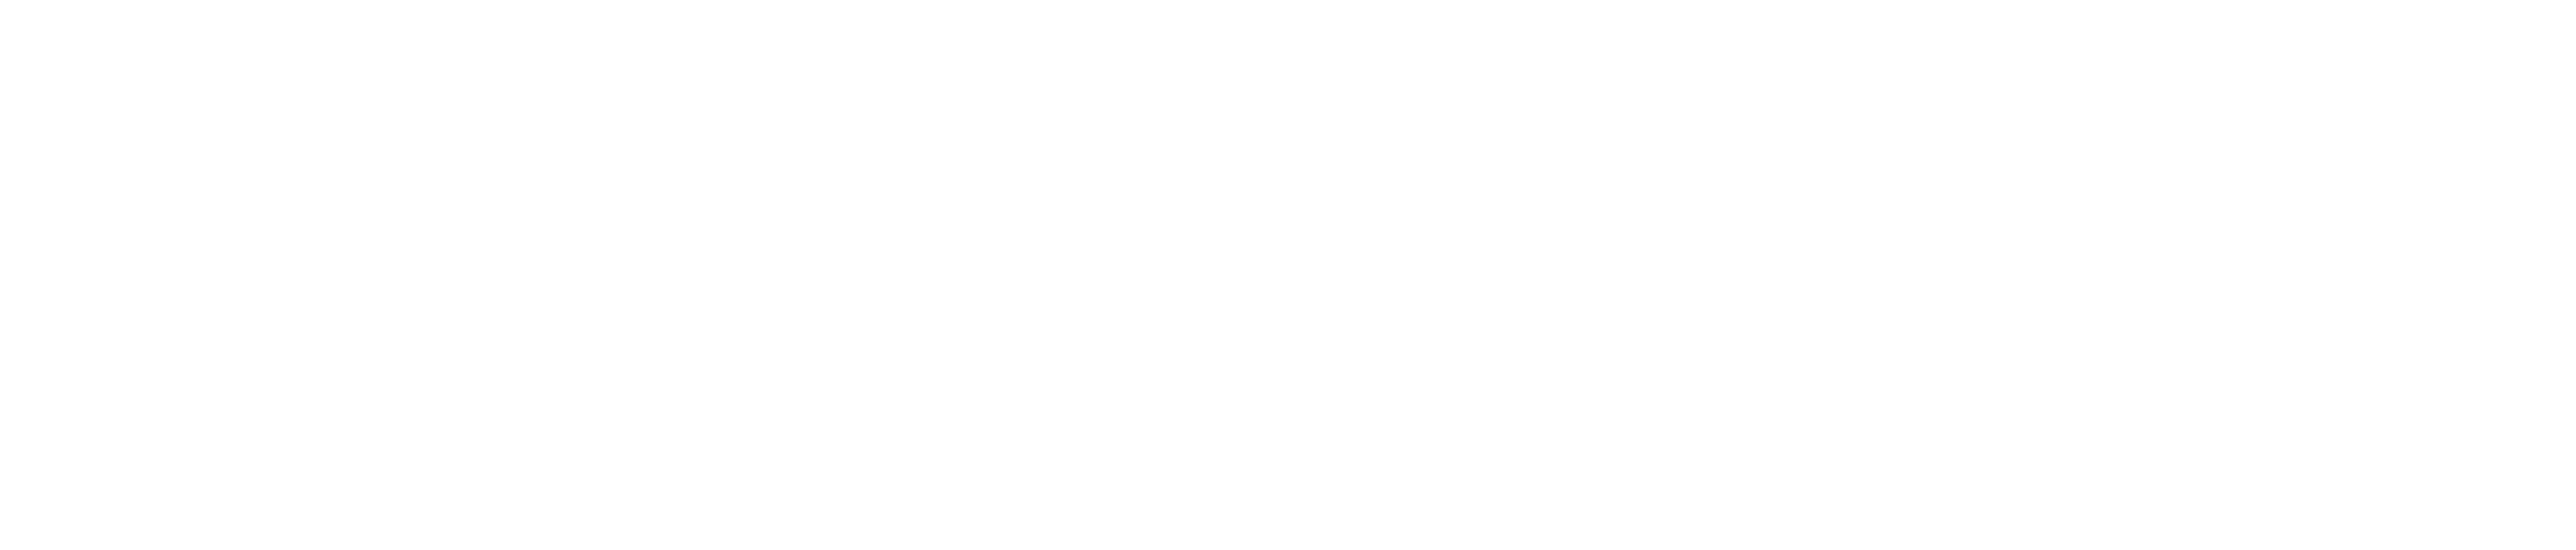 leadwest-medical-logo-white